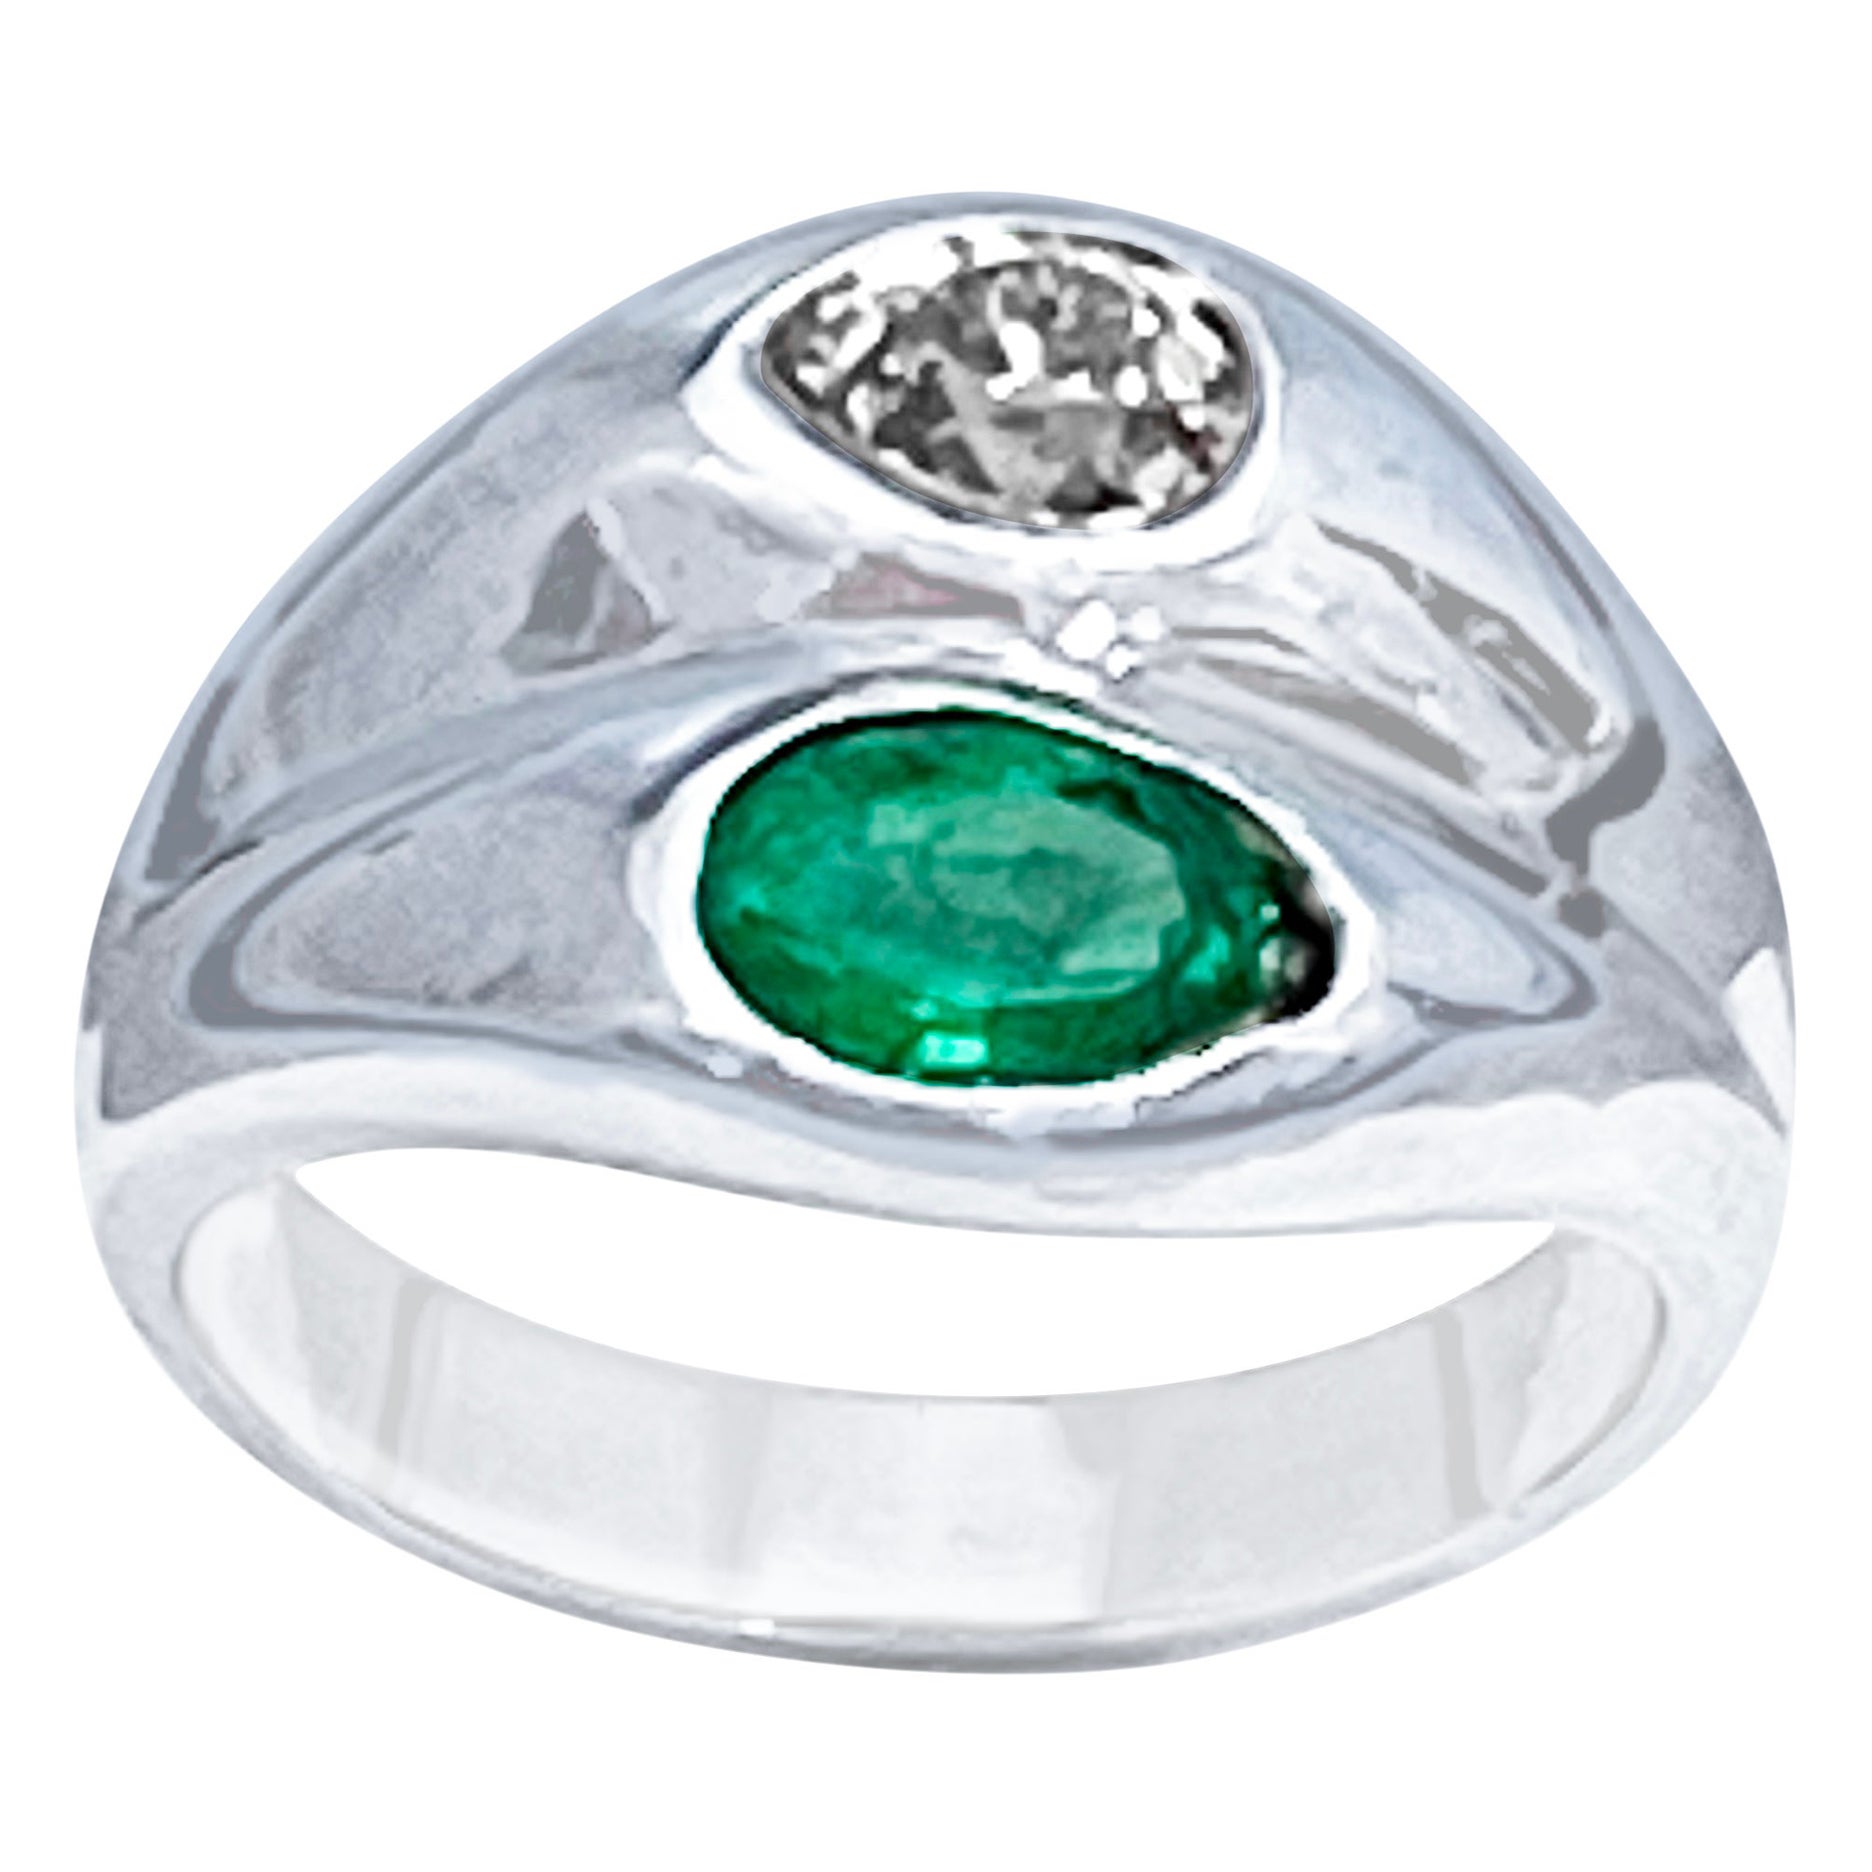 1 Carat Pear Cut Emerald and 0.8ct Diamond Ring 14 Karat White Gold